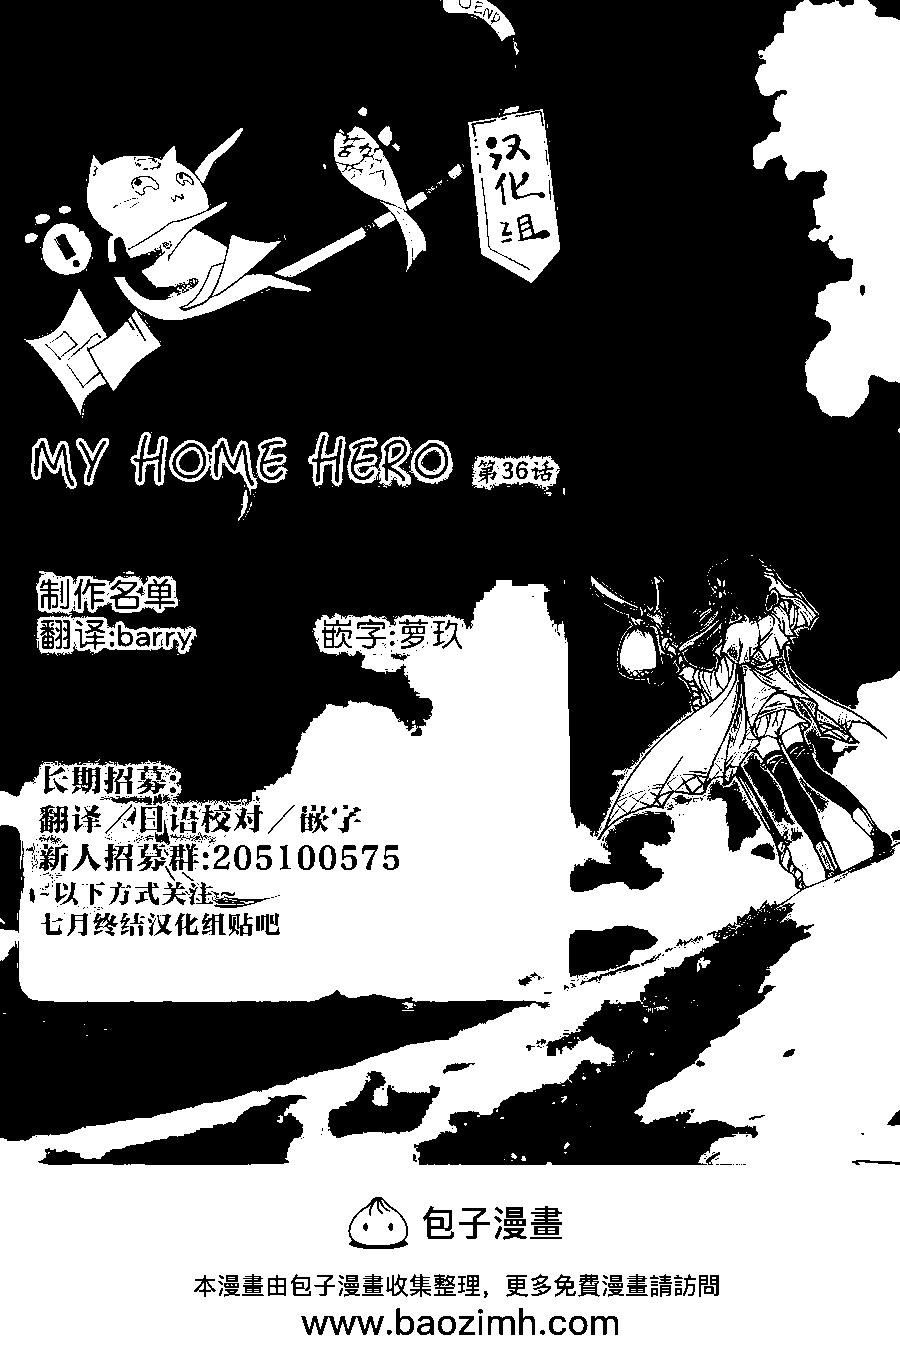 MY HOME HERO - 第36回 - 3